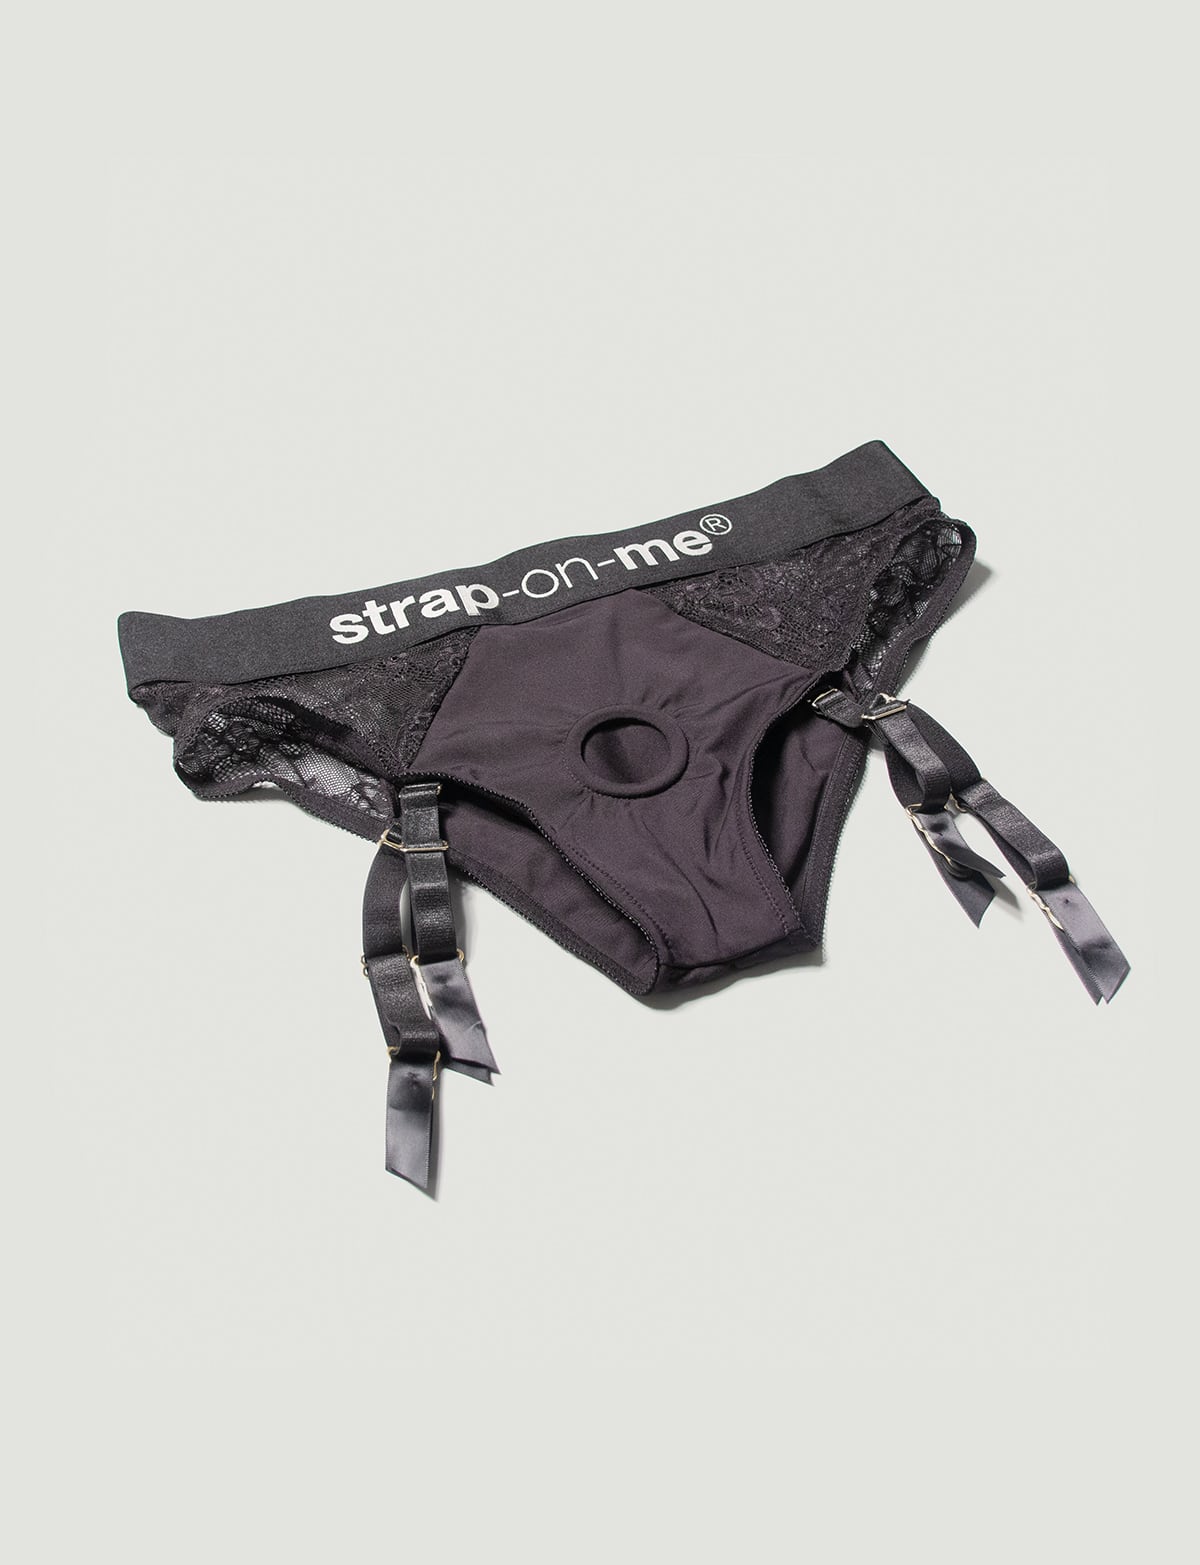 Brief+ Harness Strap-On